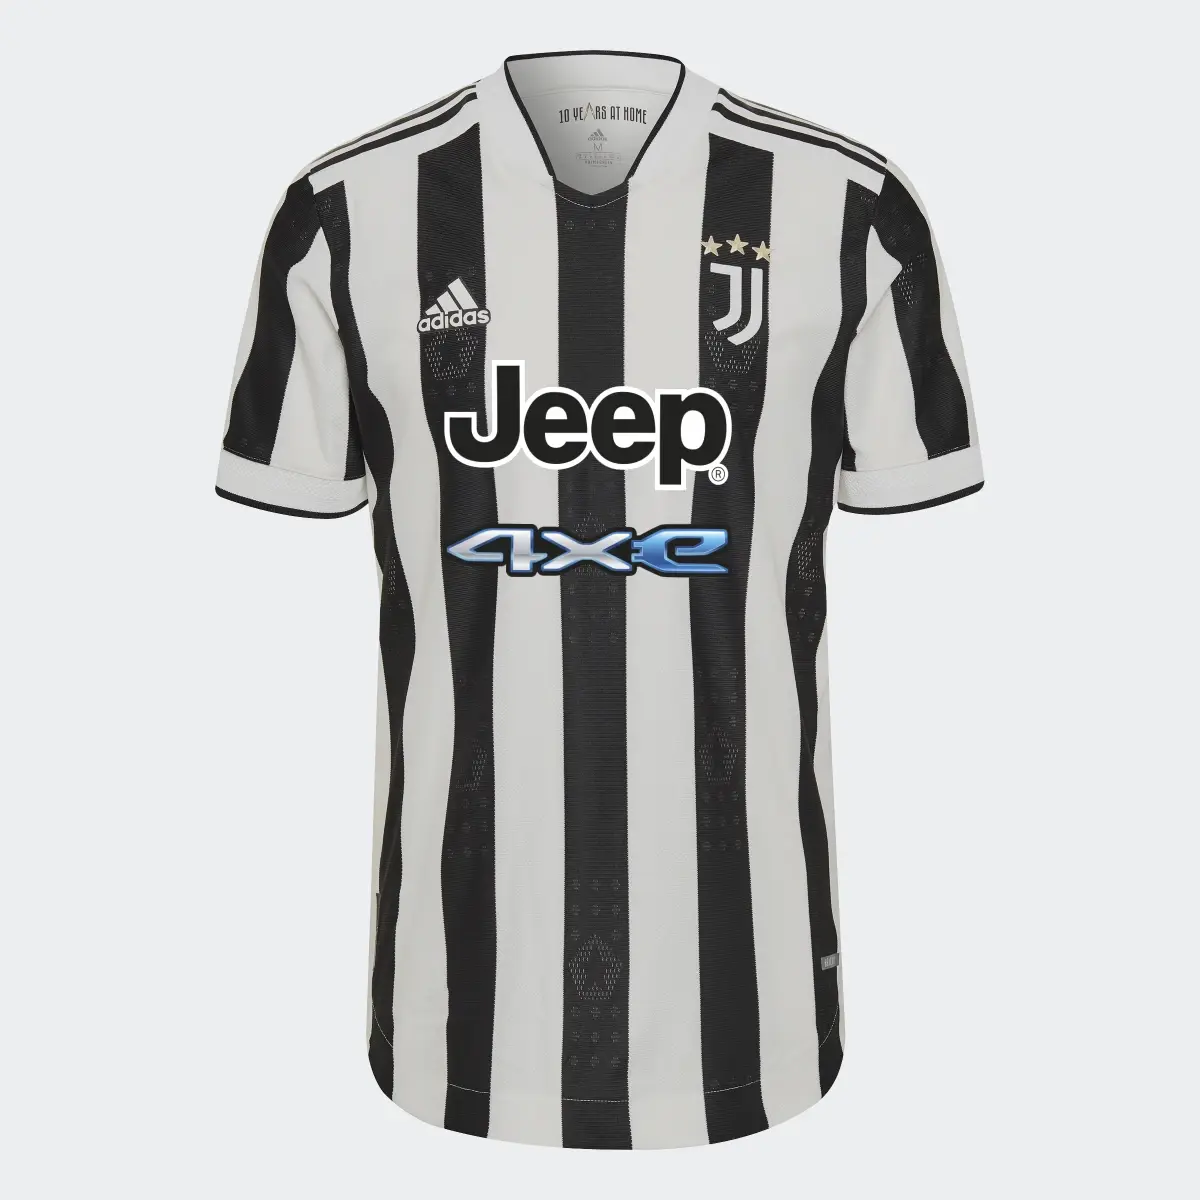 Adidas Camisola Principal Oficial 21/22 da Juventus. 1